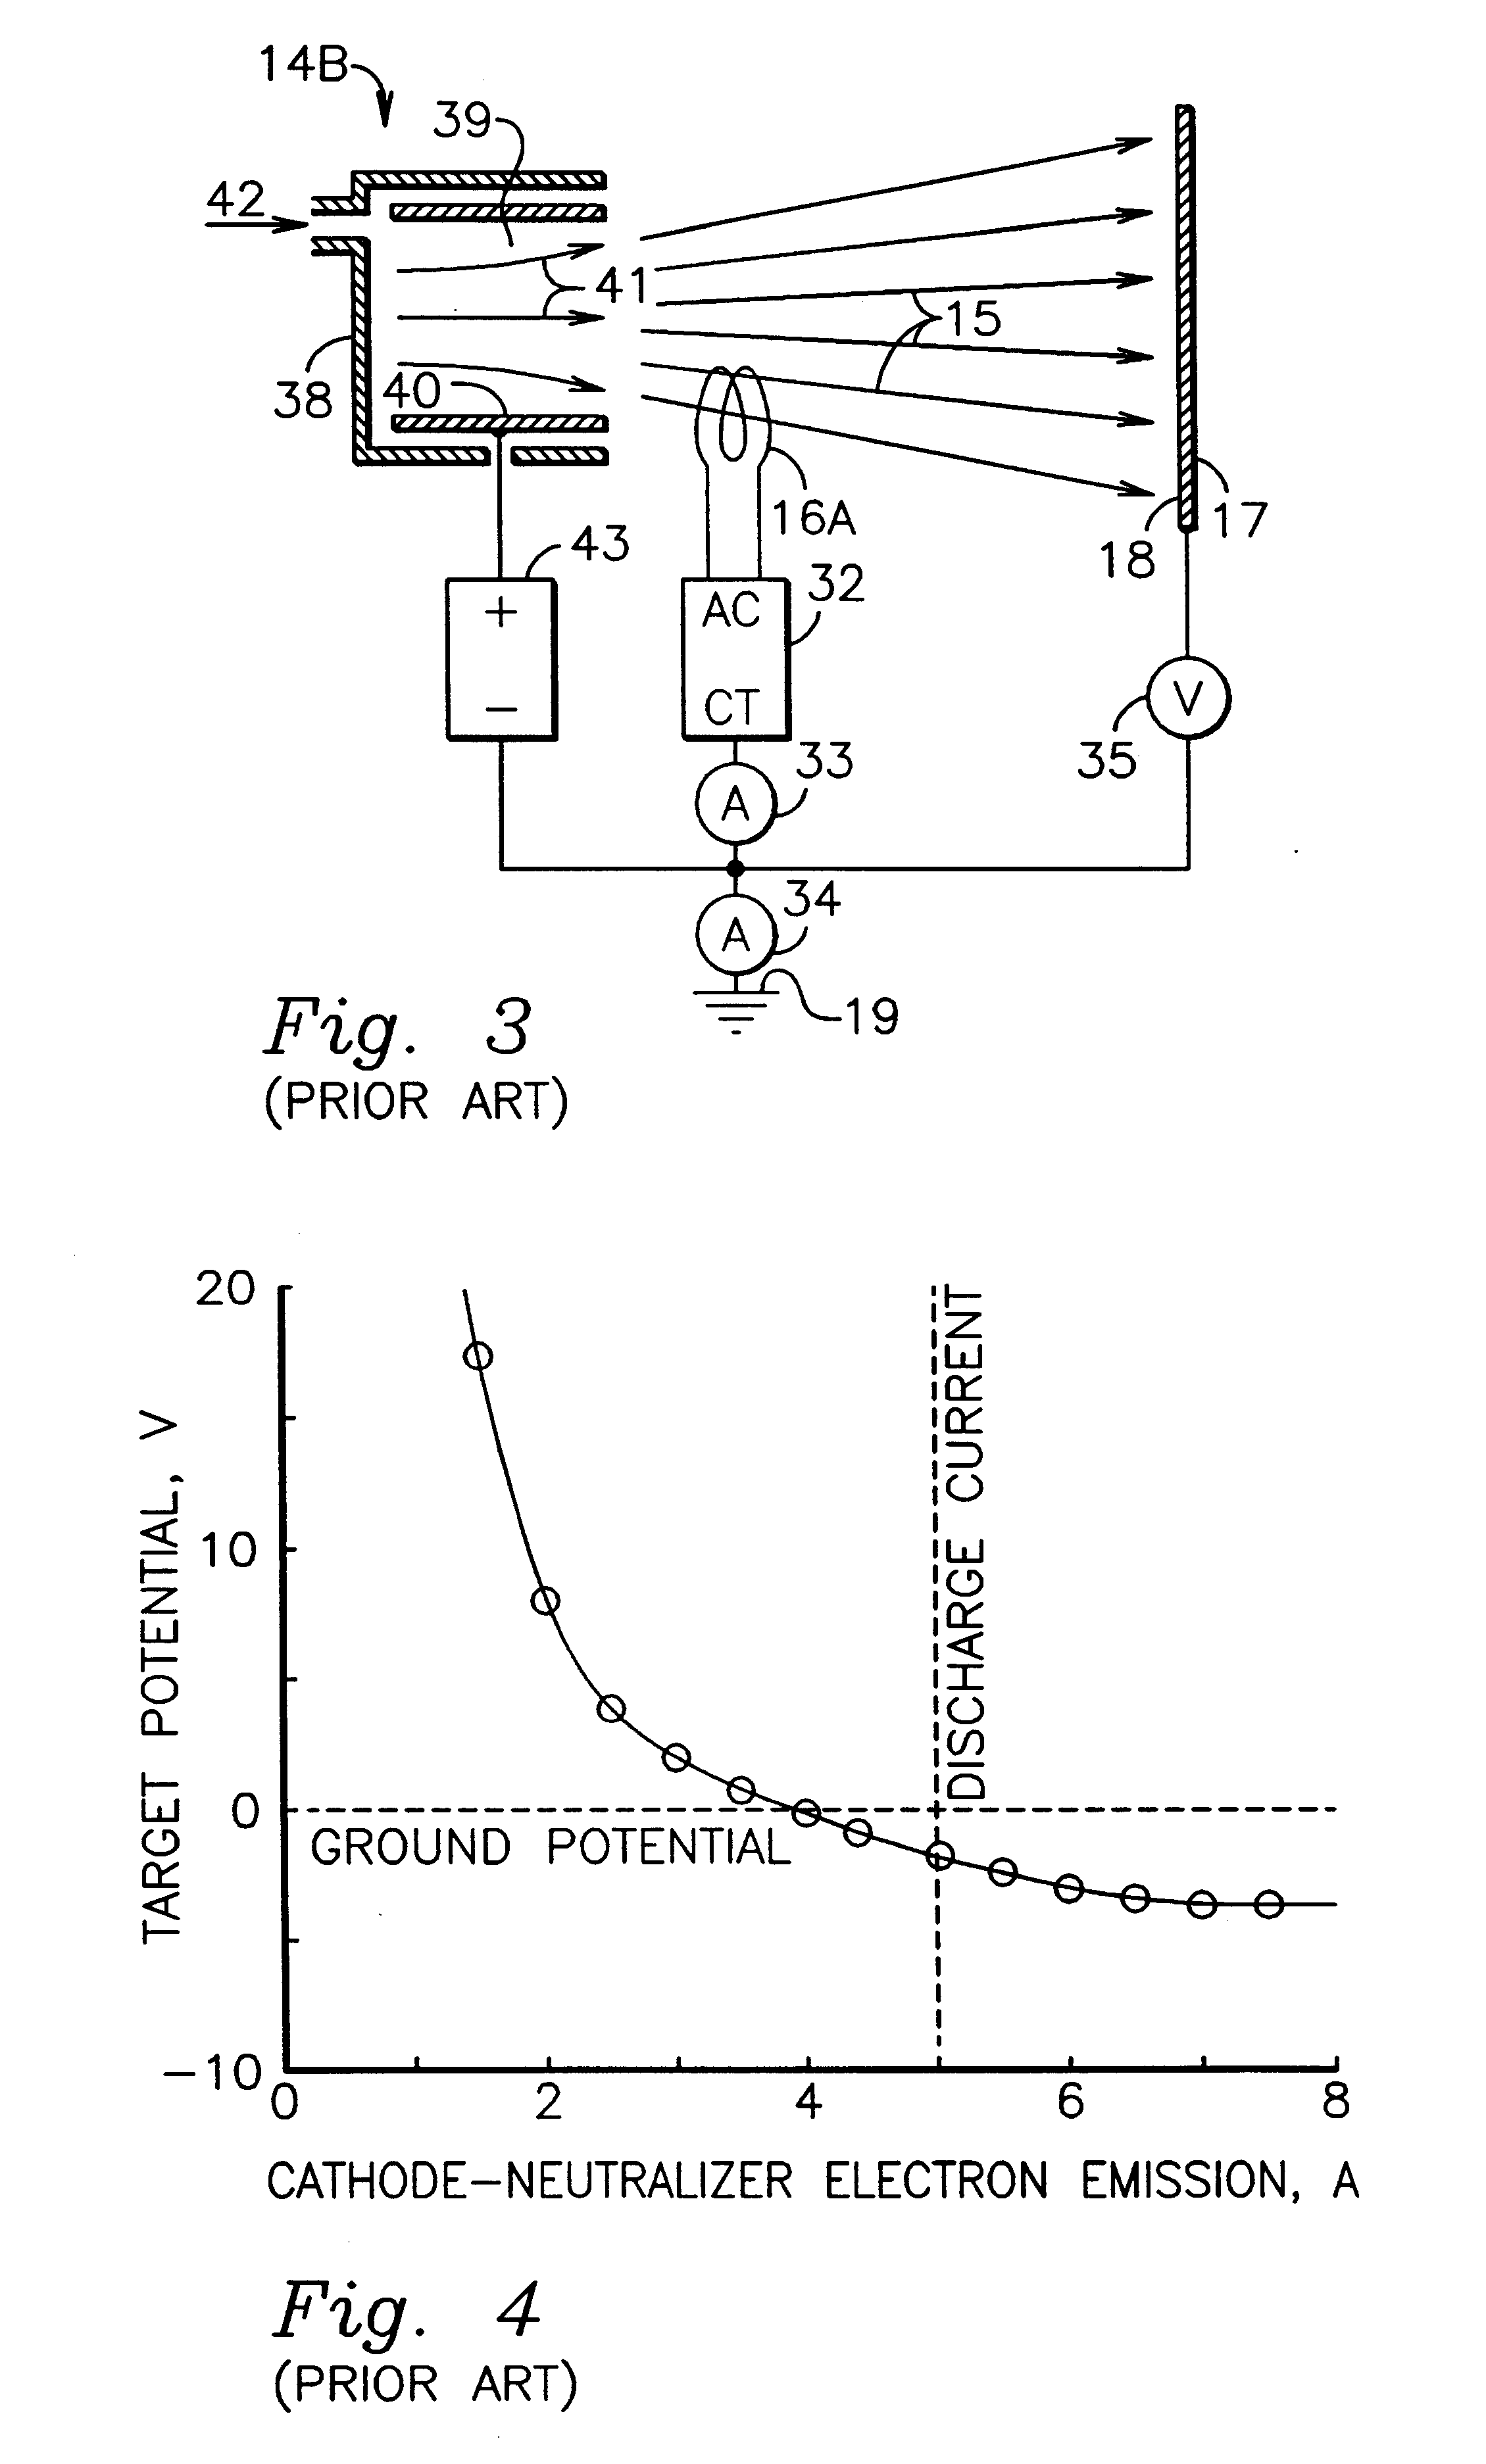 Ion-source neutralization with a hot-filament cathode-neutralizer